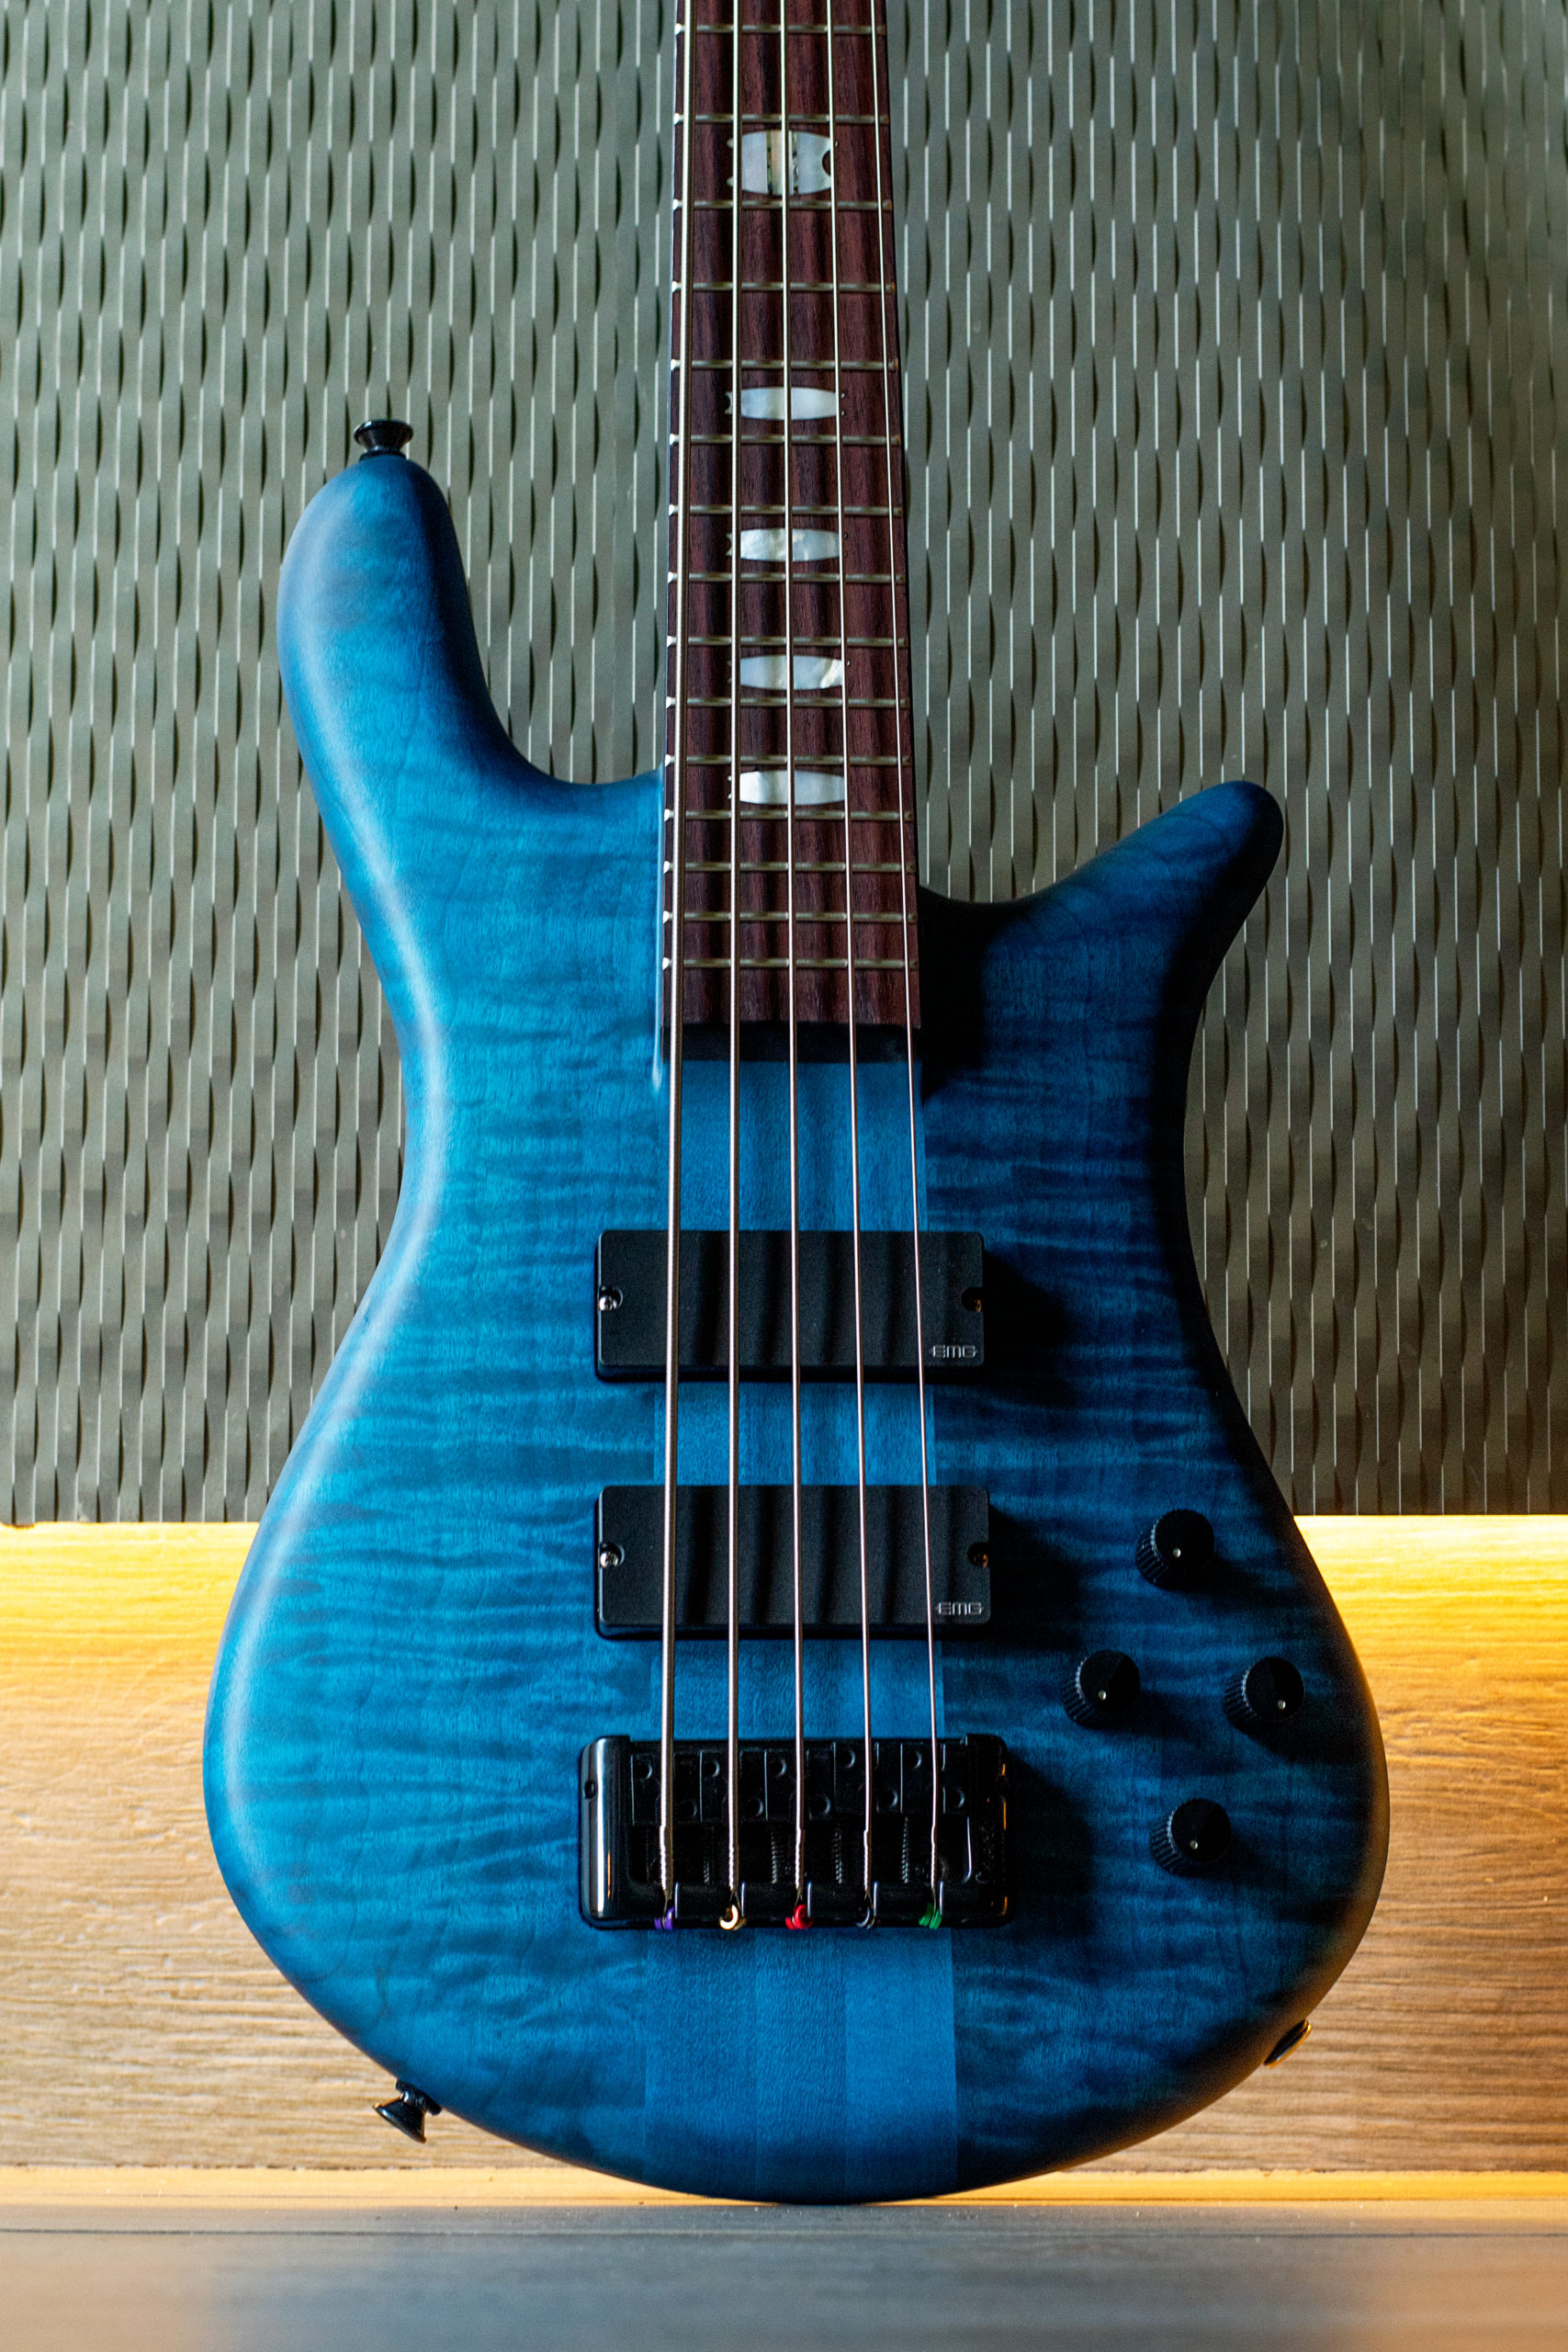 body of blue bass